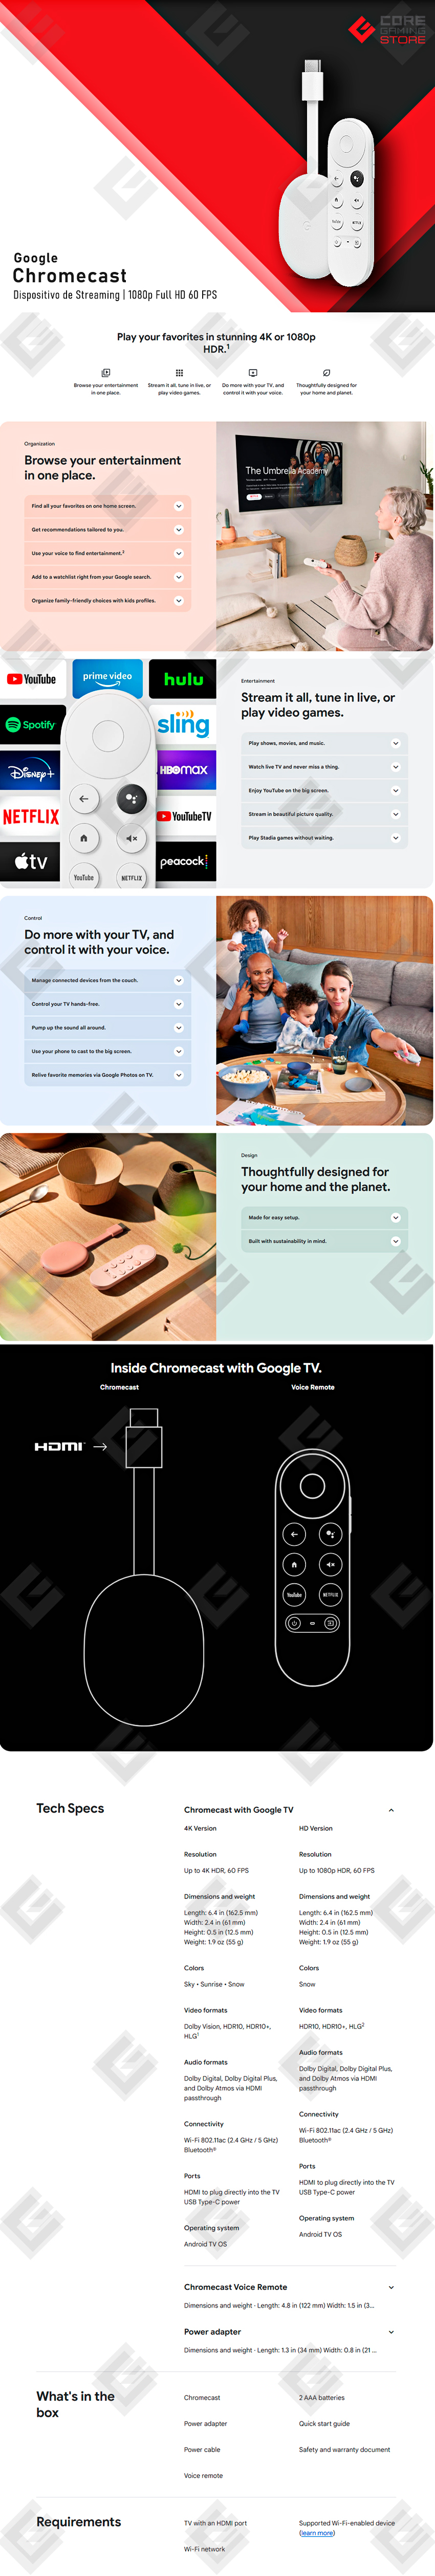 Google Chromecast con Google TV | Dispisitivo de Streaming Full HD | Asistente de voz | Blanco - ACCGOO060 